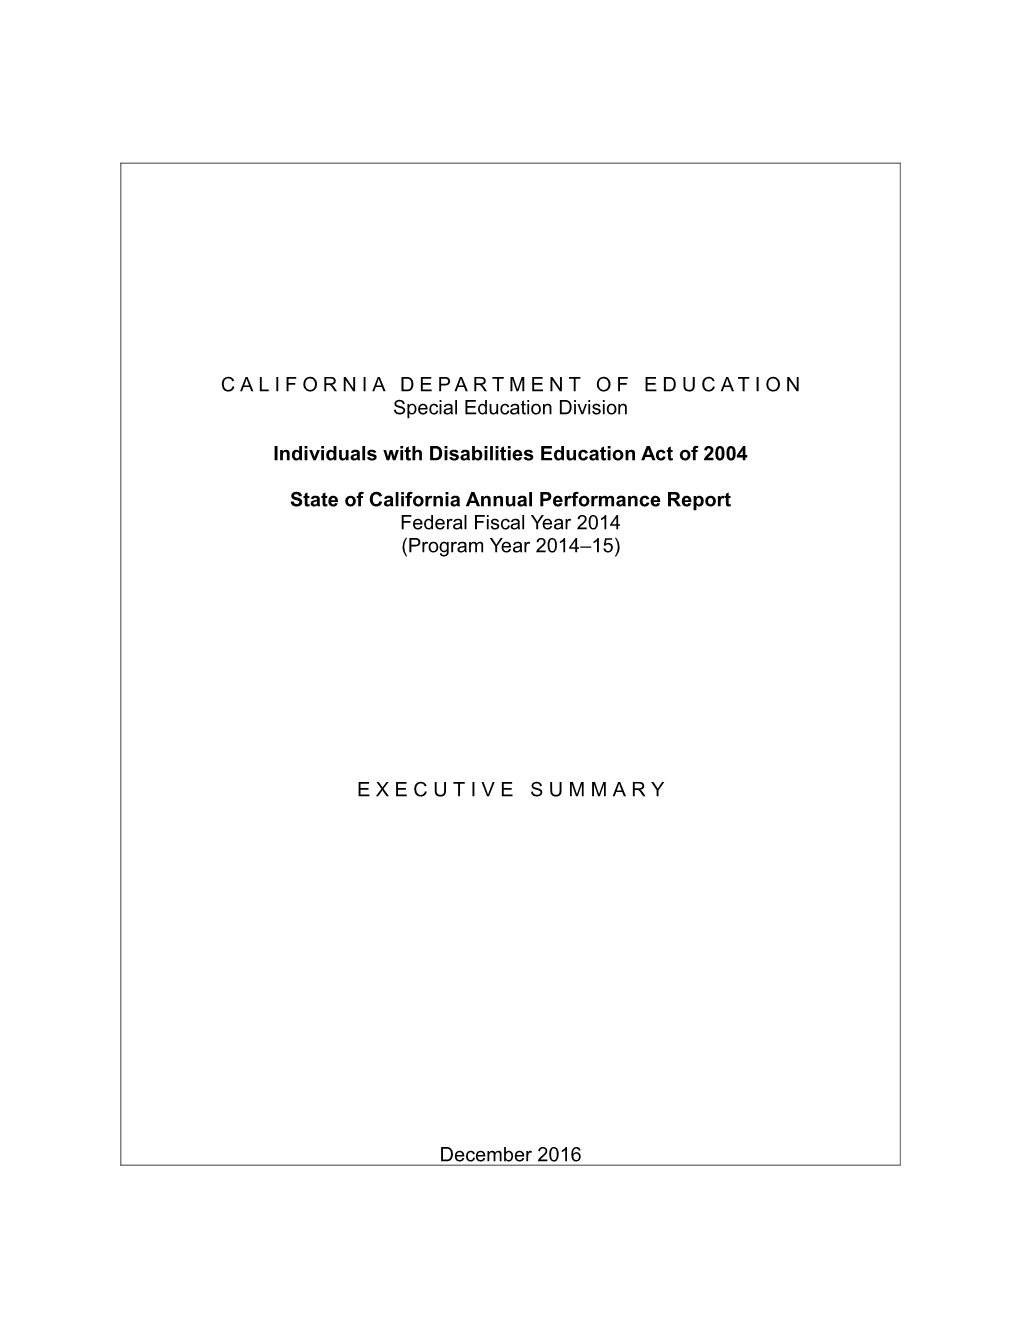 Executive Summary APR FFY 2014 - Quality Assurance Process (CA Dept of Education)